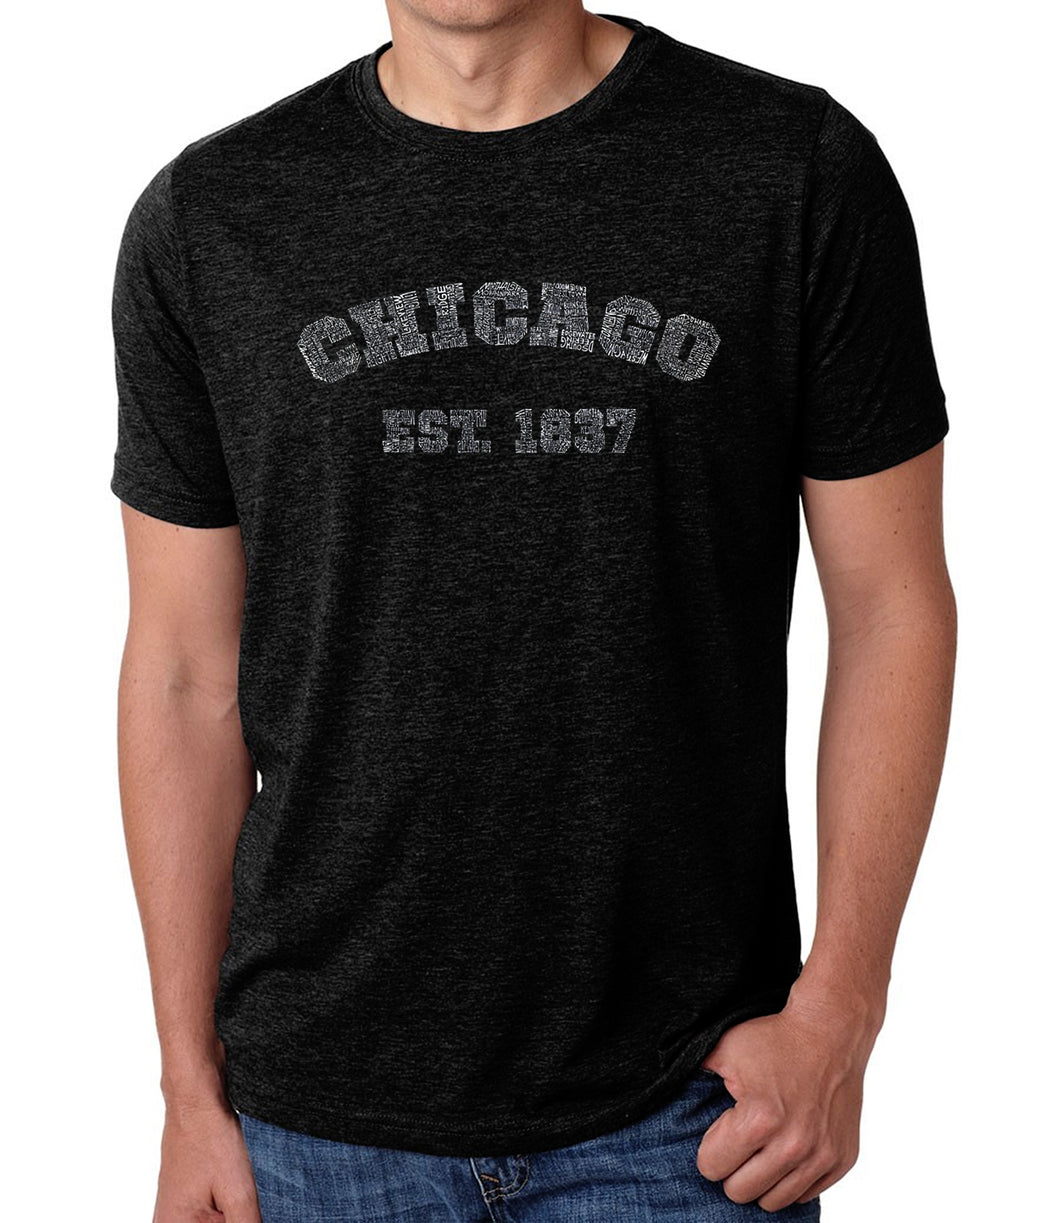 Chicago 1837 - Men's Premium Blend Word Art T-Shirt